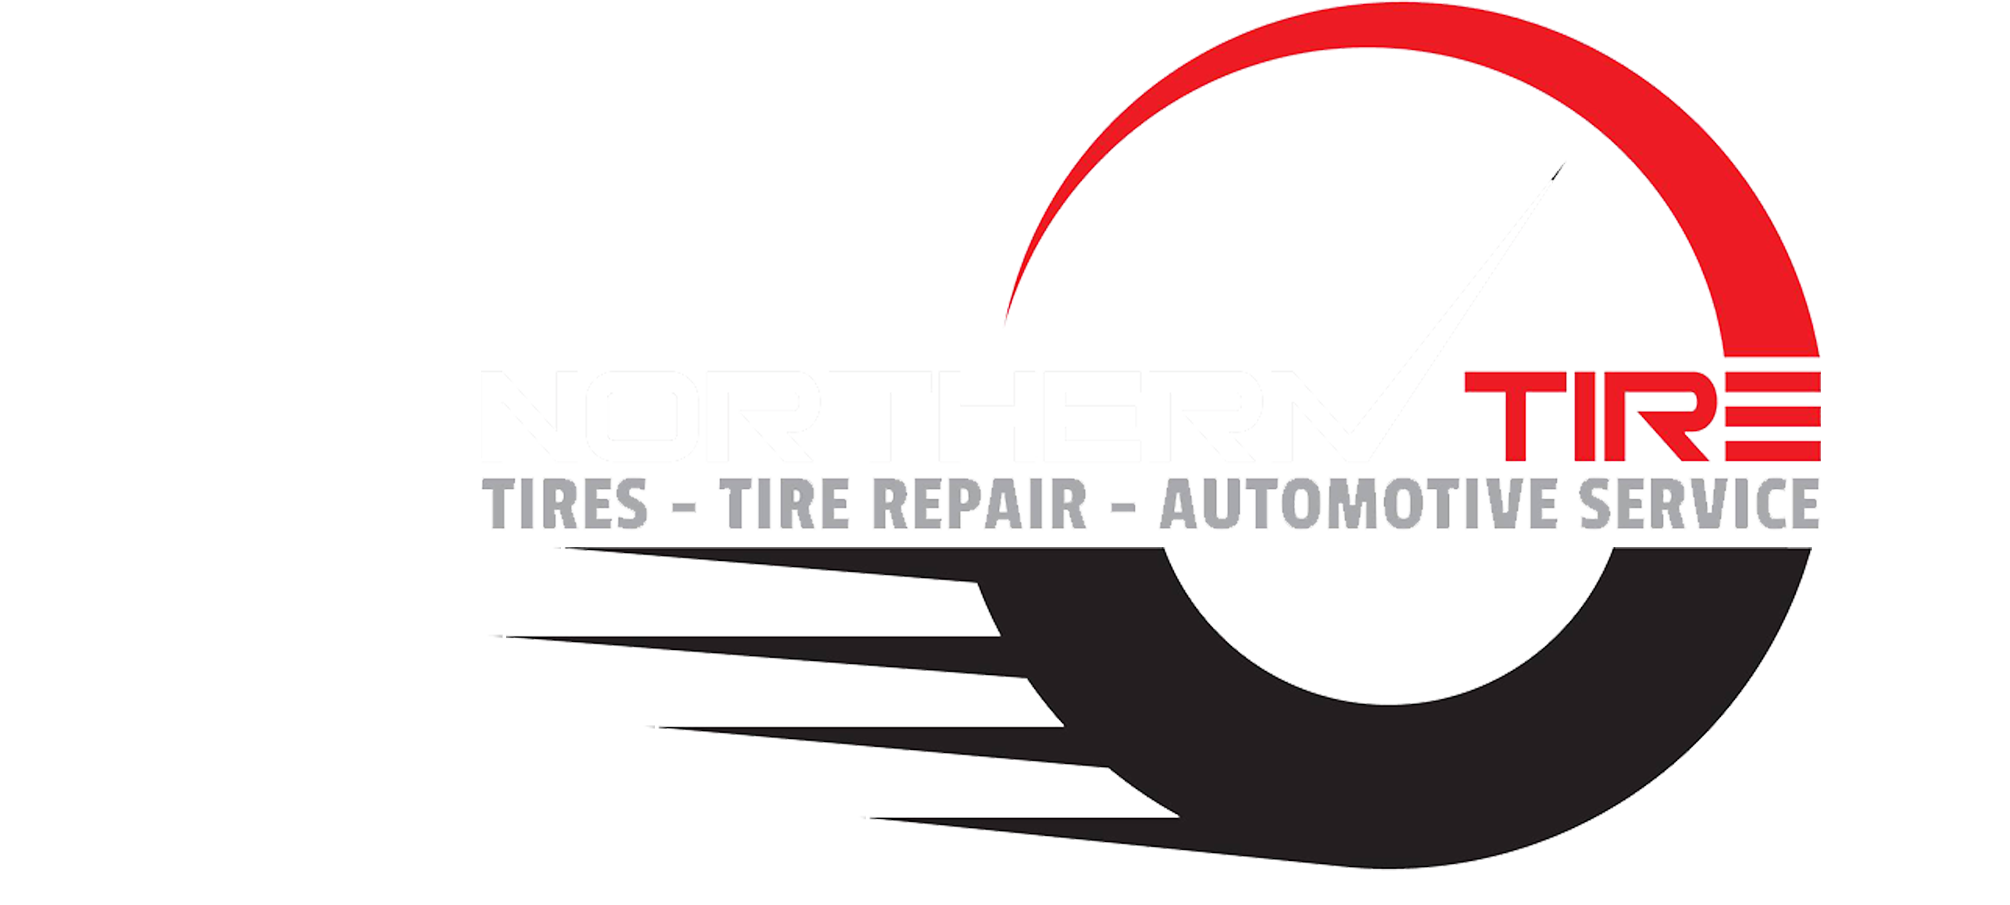 Northern Tire logo